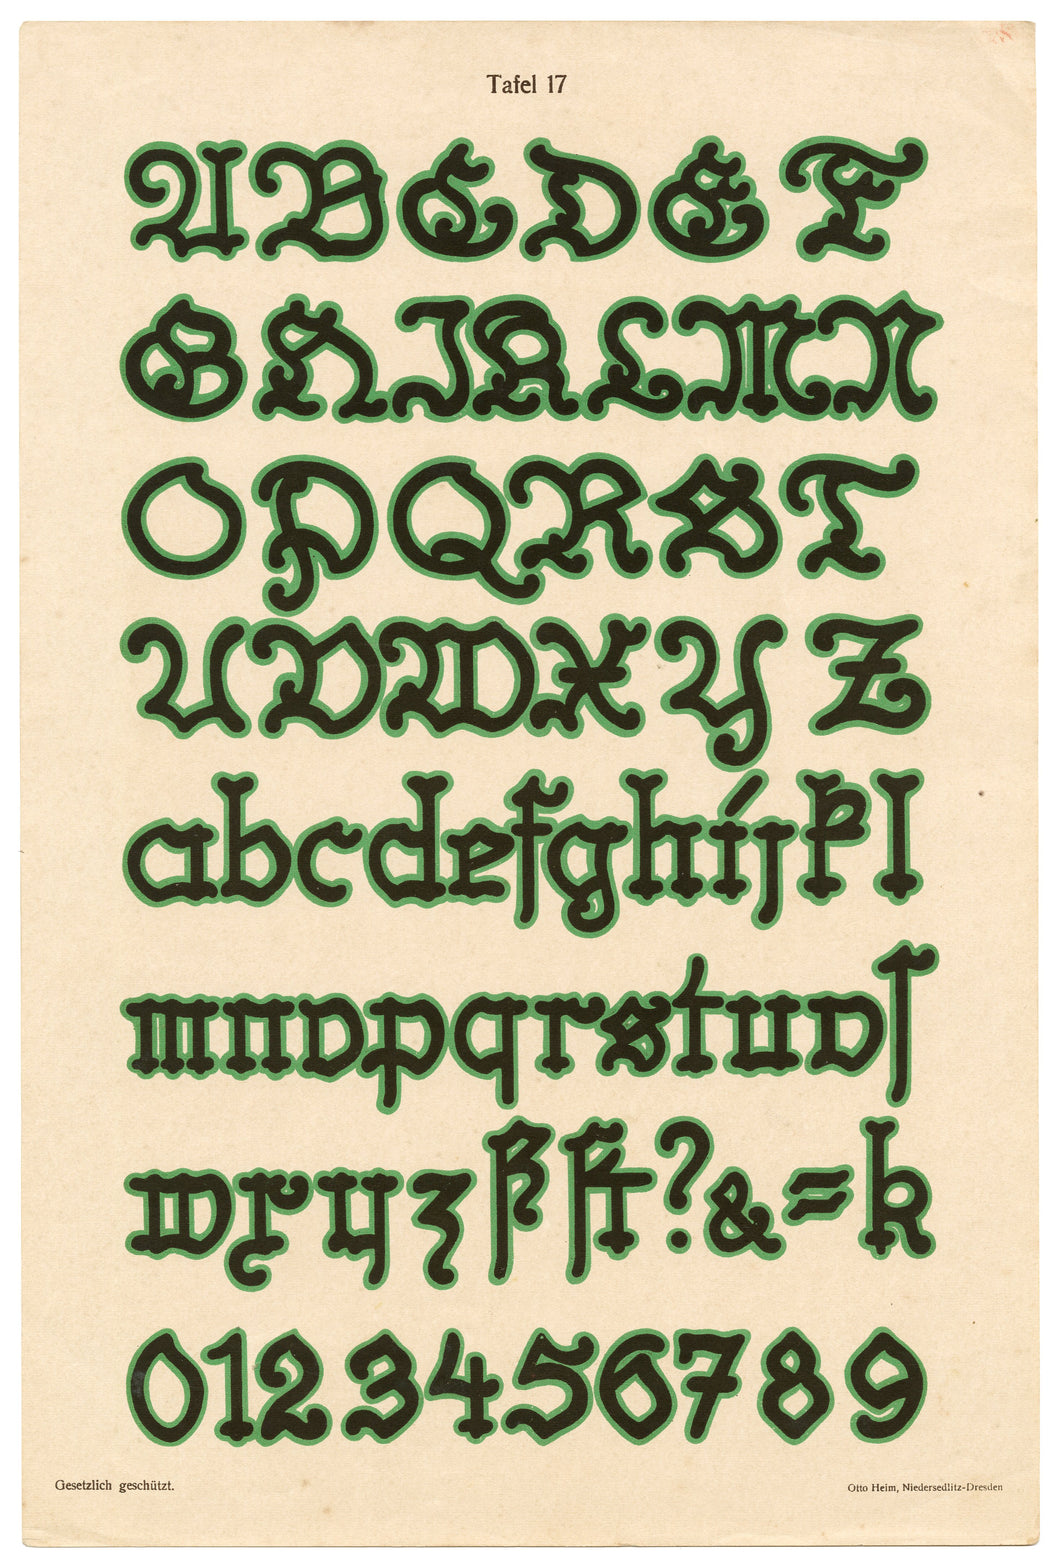 1930's Art Deco Farbige Alphabete Plate 17, Lettering, Typography, Graphic Design